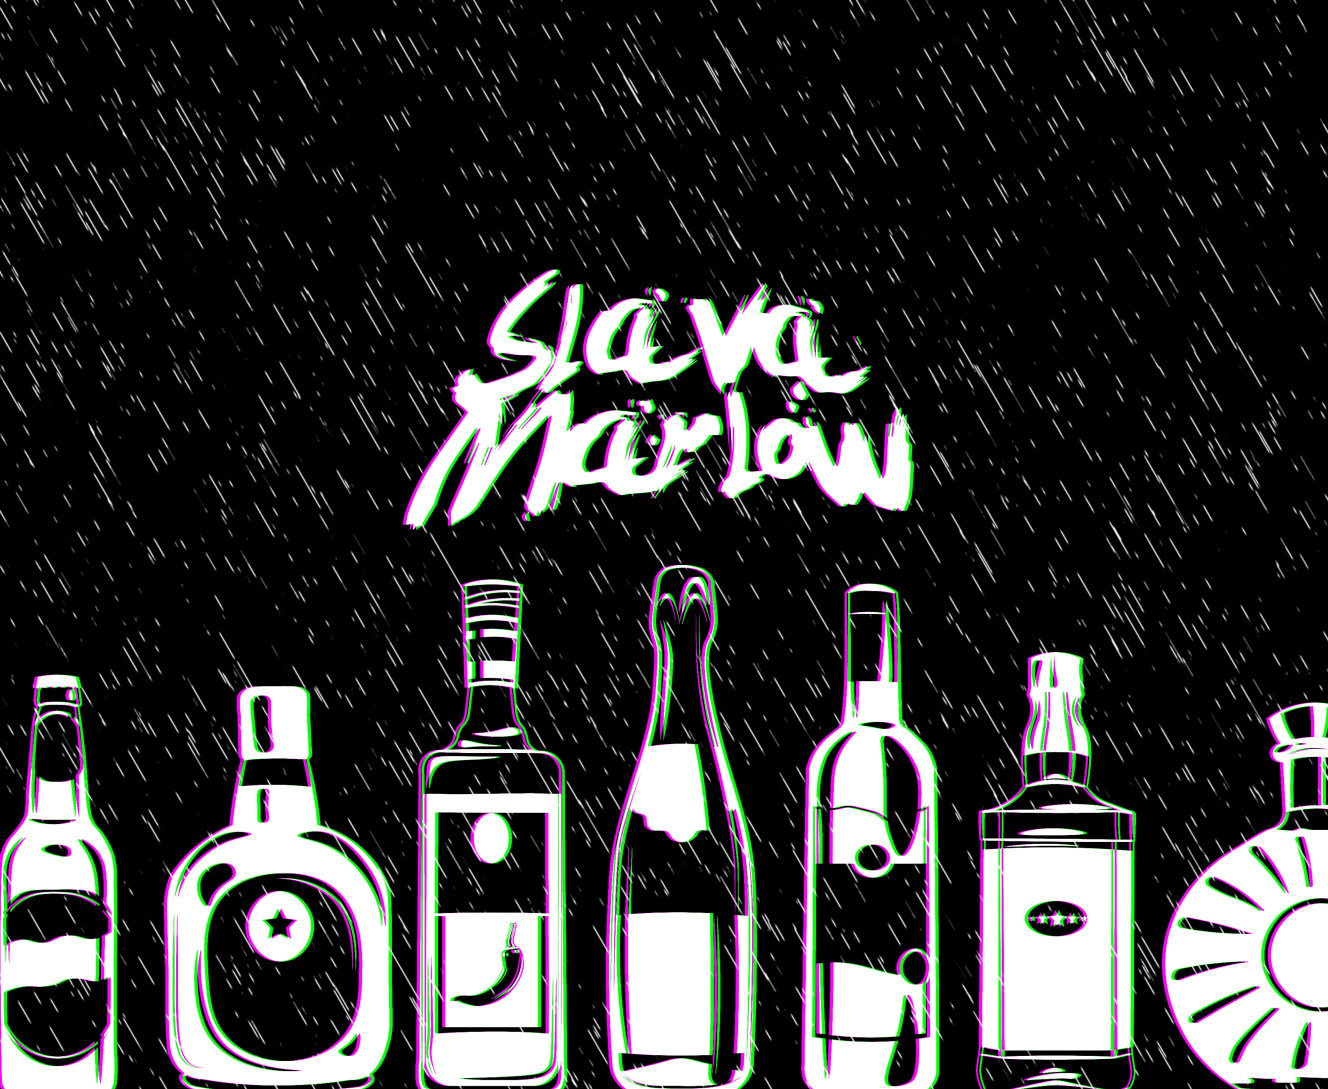 SLAVA MARLOW (1)